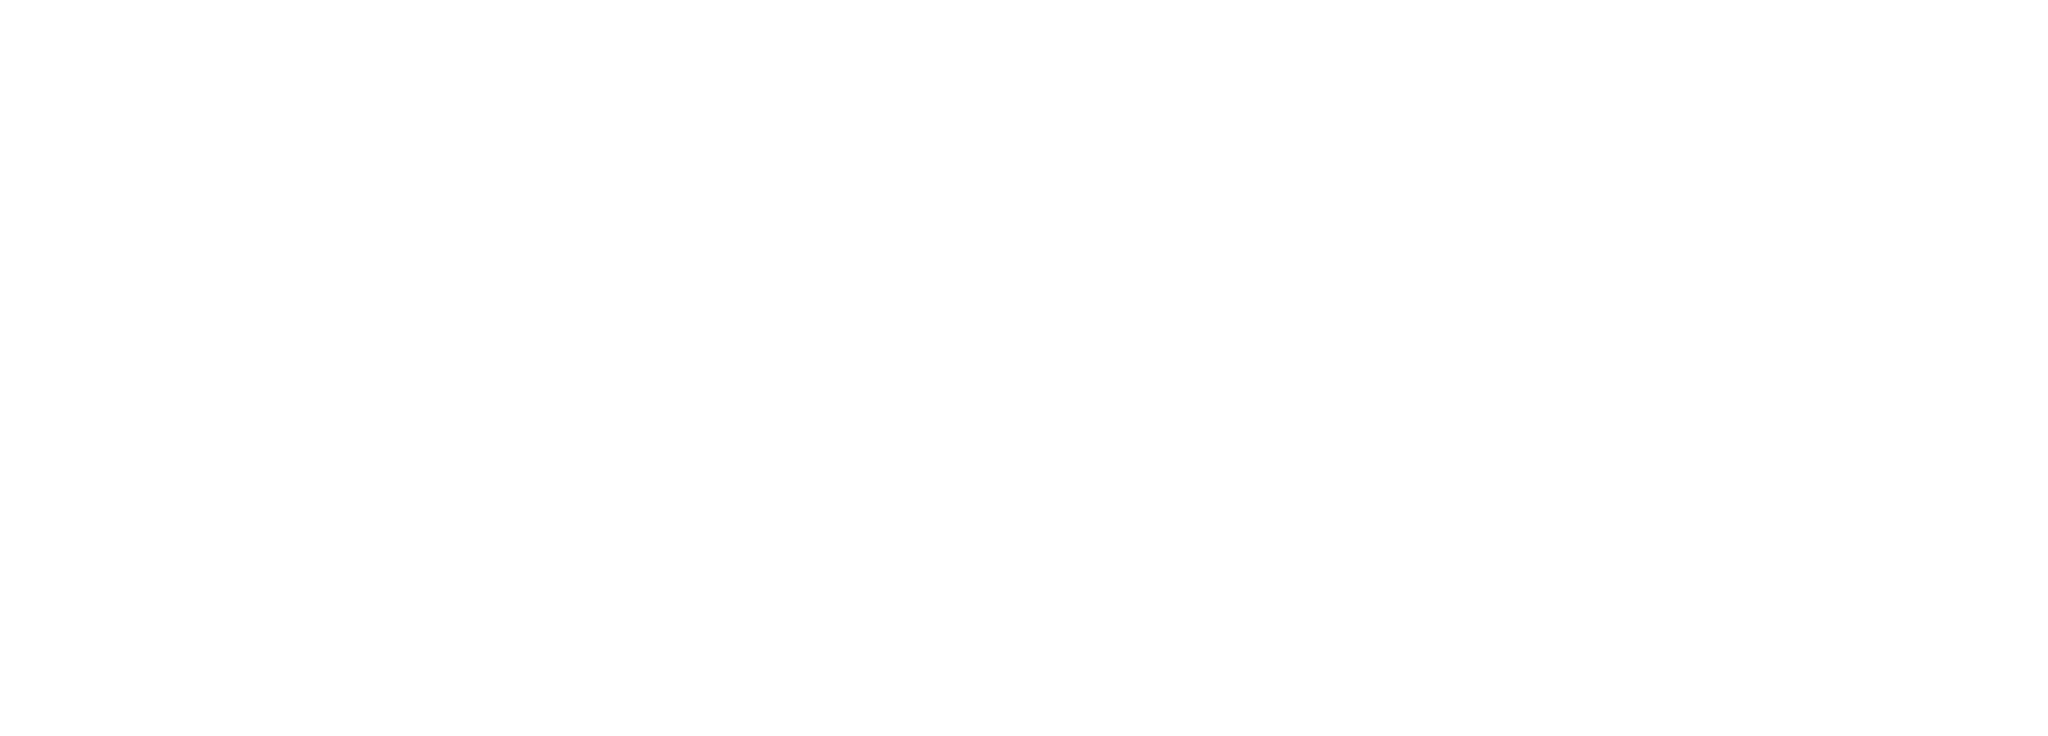 Axmar bruk logo vit